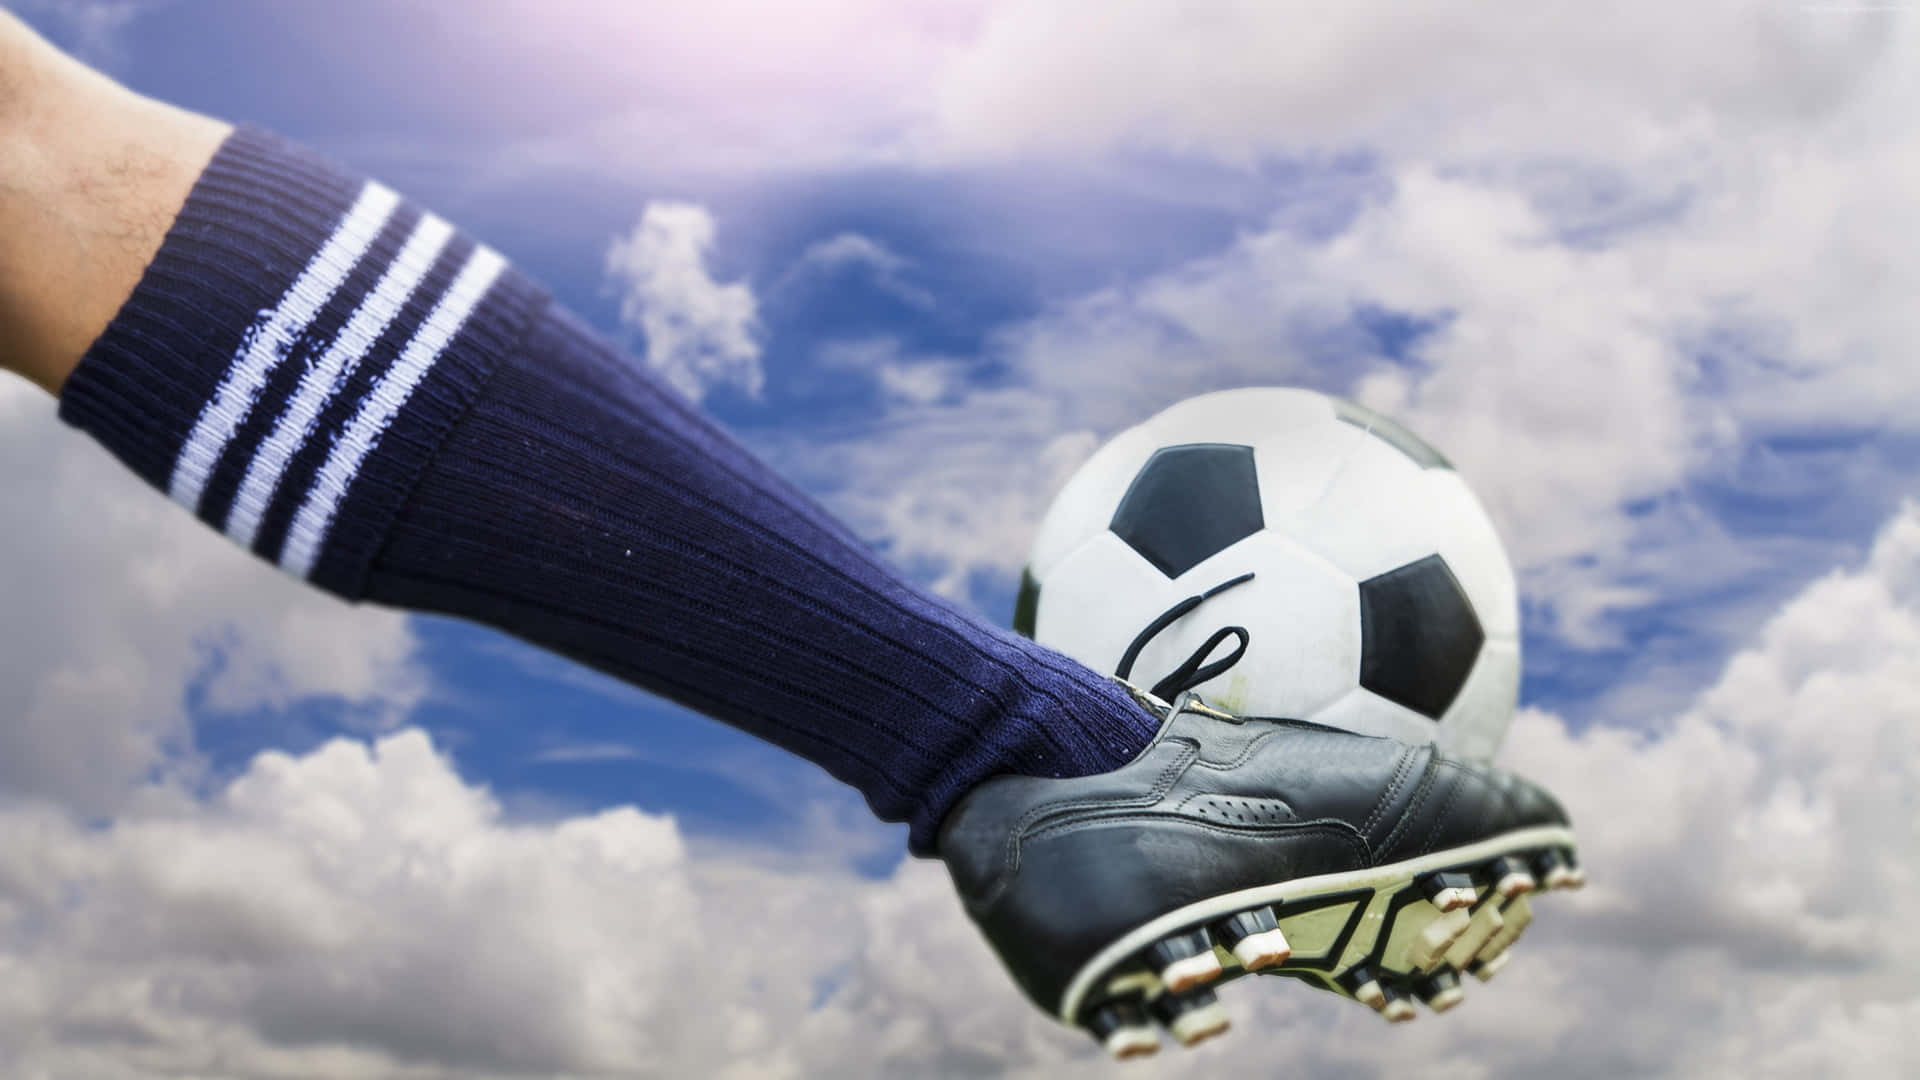 Soccer Cleat Kicking Ball Against Sky Wallpaper